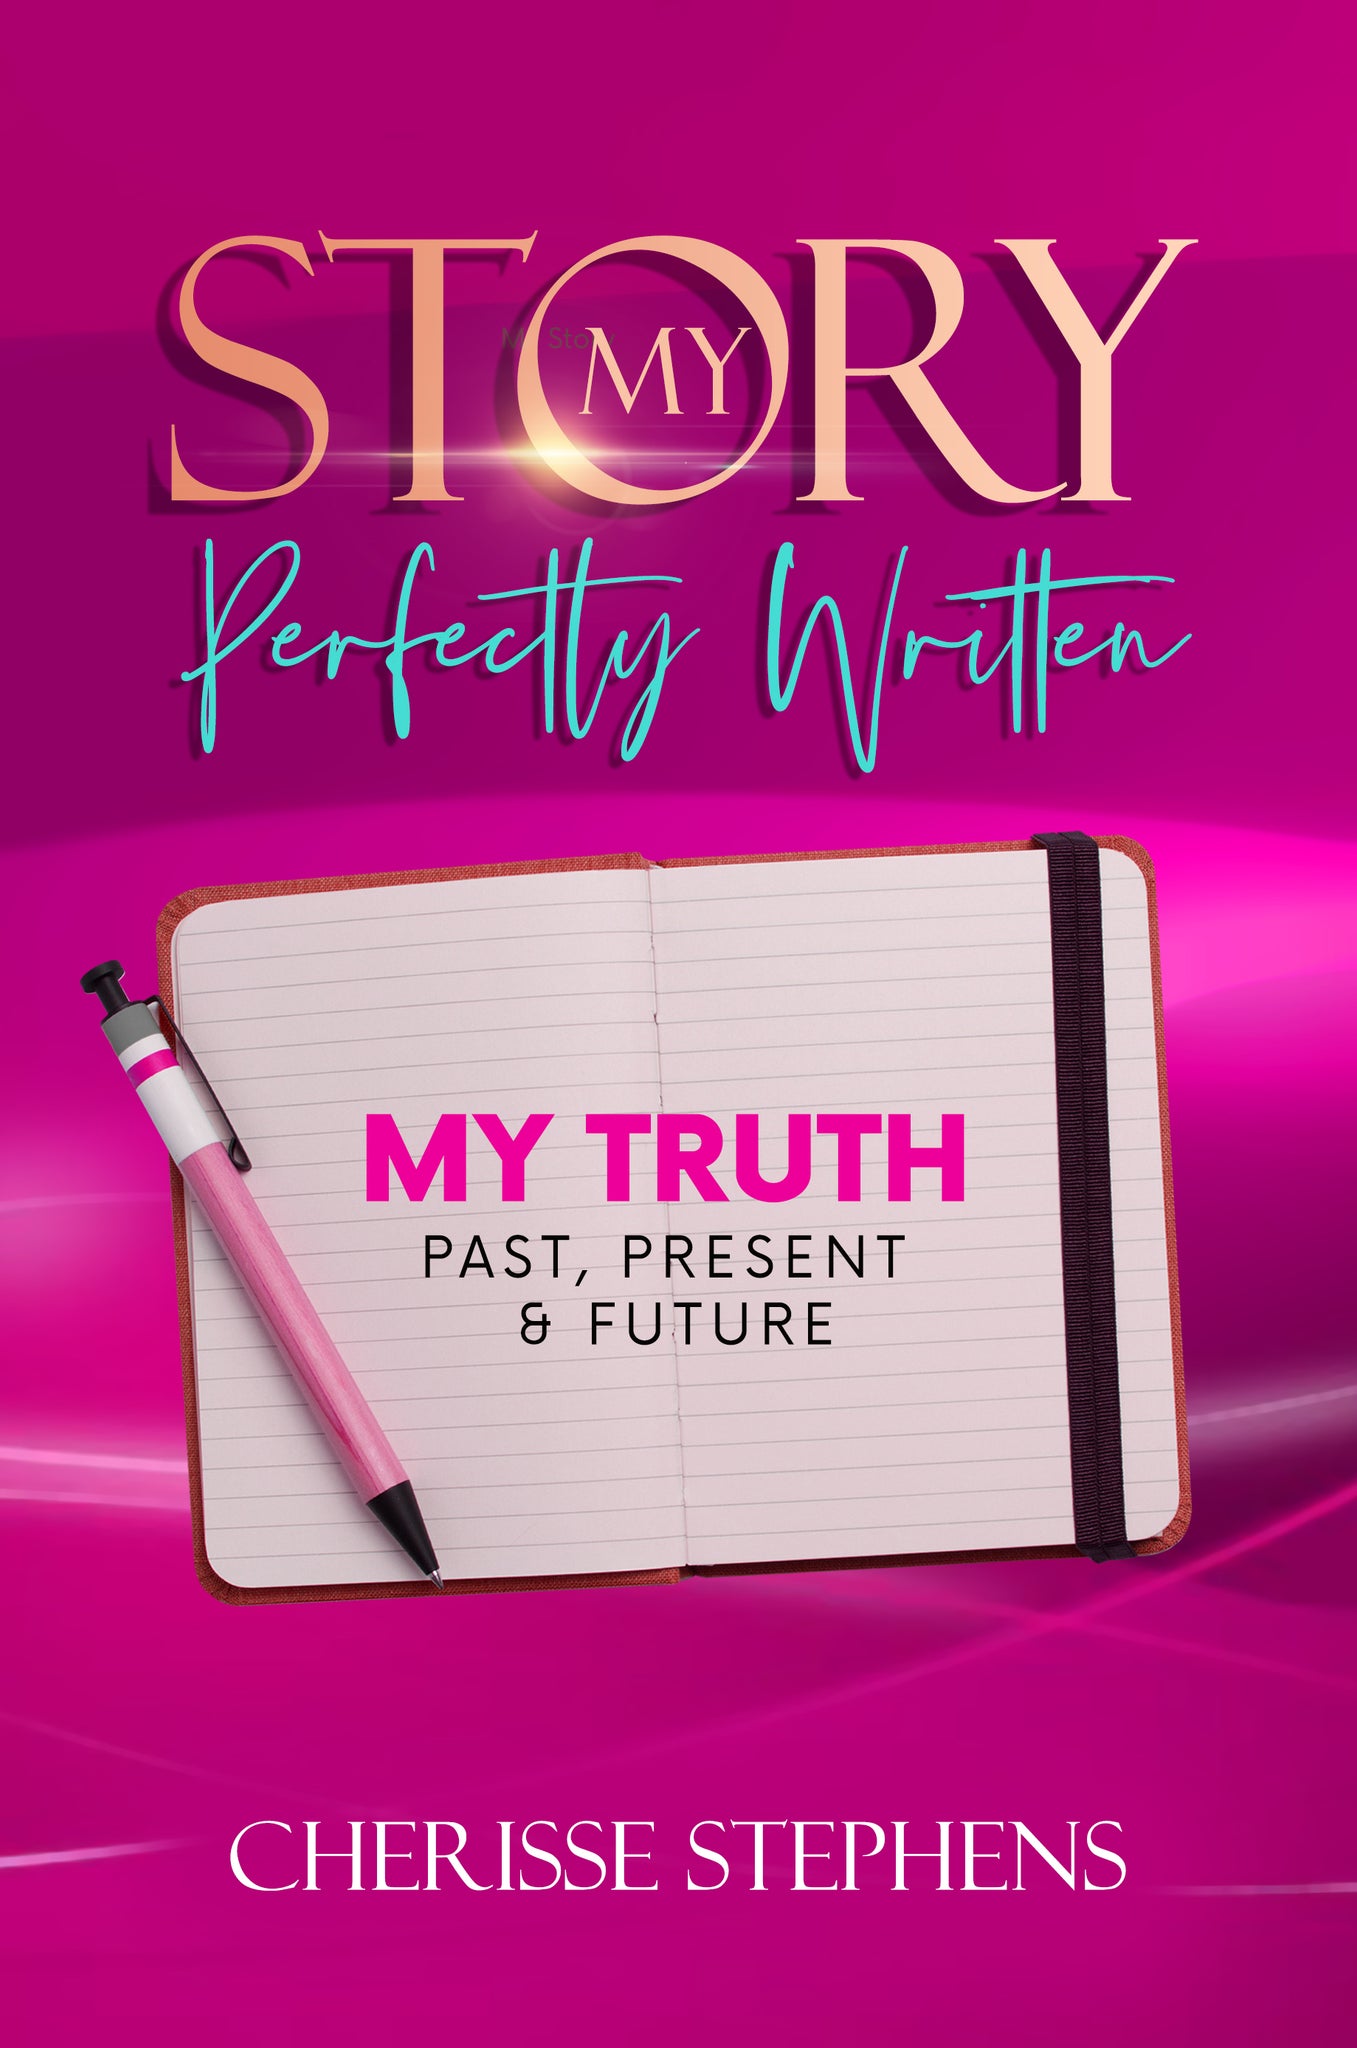 GLAM - My Story Perfectly Written Journal